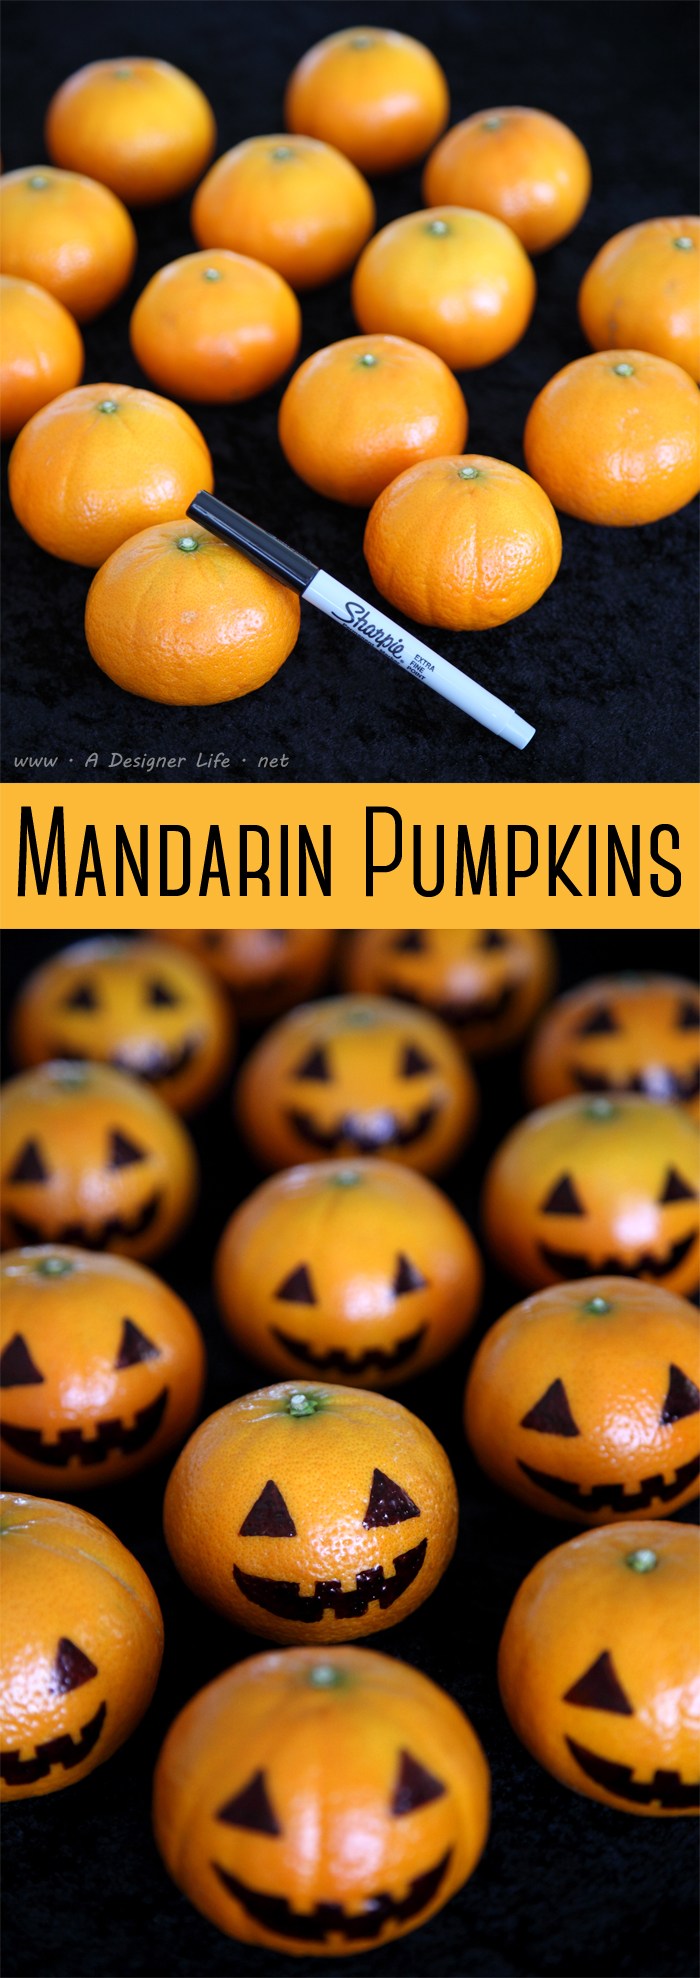 Mandarine-pumpkins-small